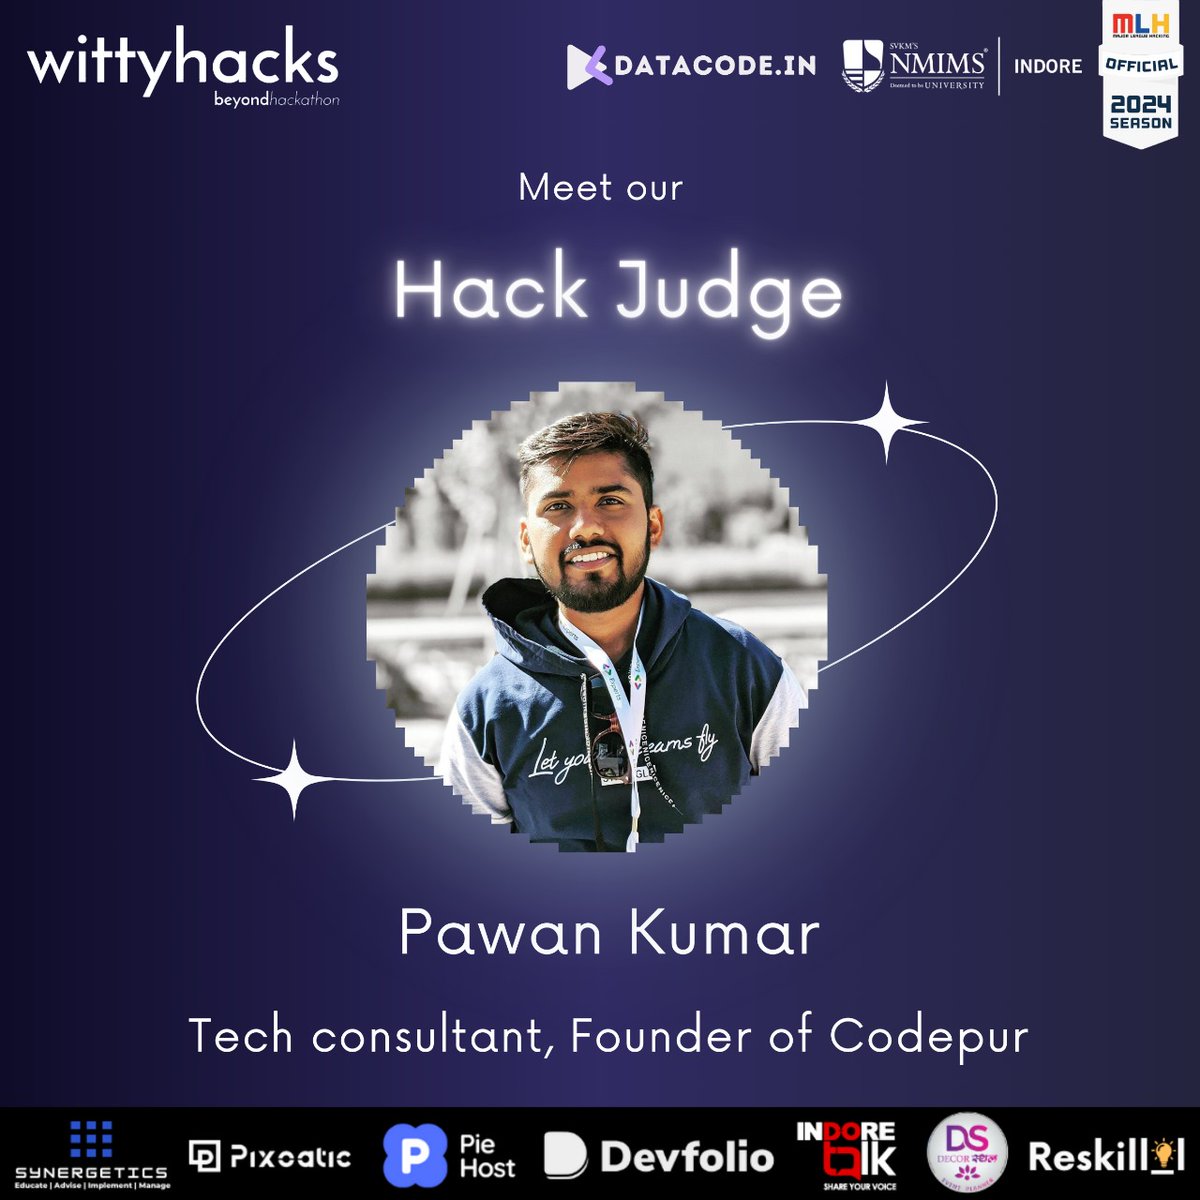 Introducing Pawan Kumar as Hack Judge for Wittyhacks 4.0 🥳🥳 #datacode #wittyhacks